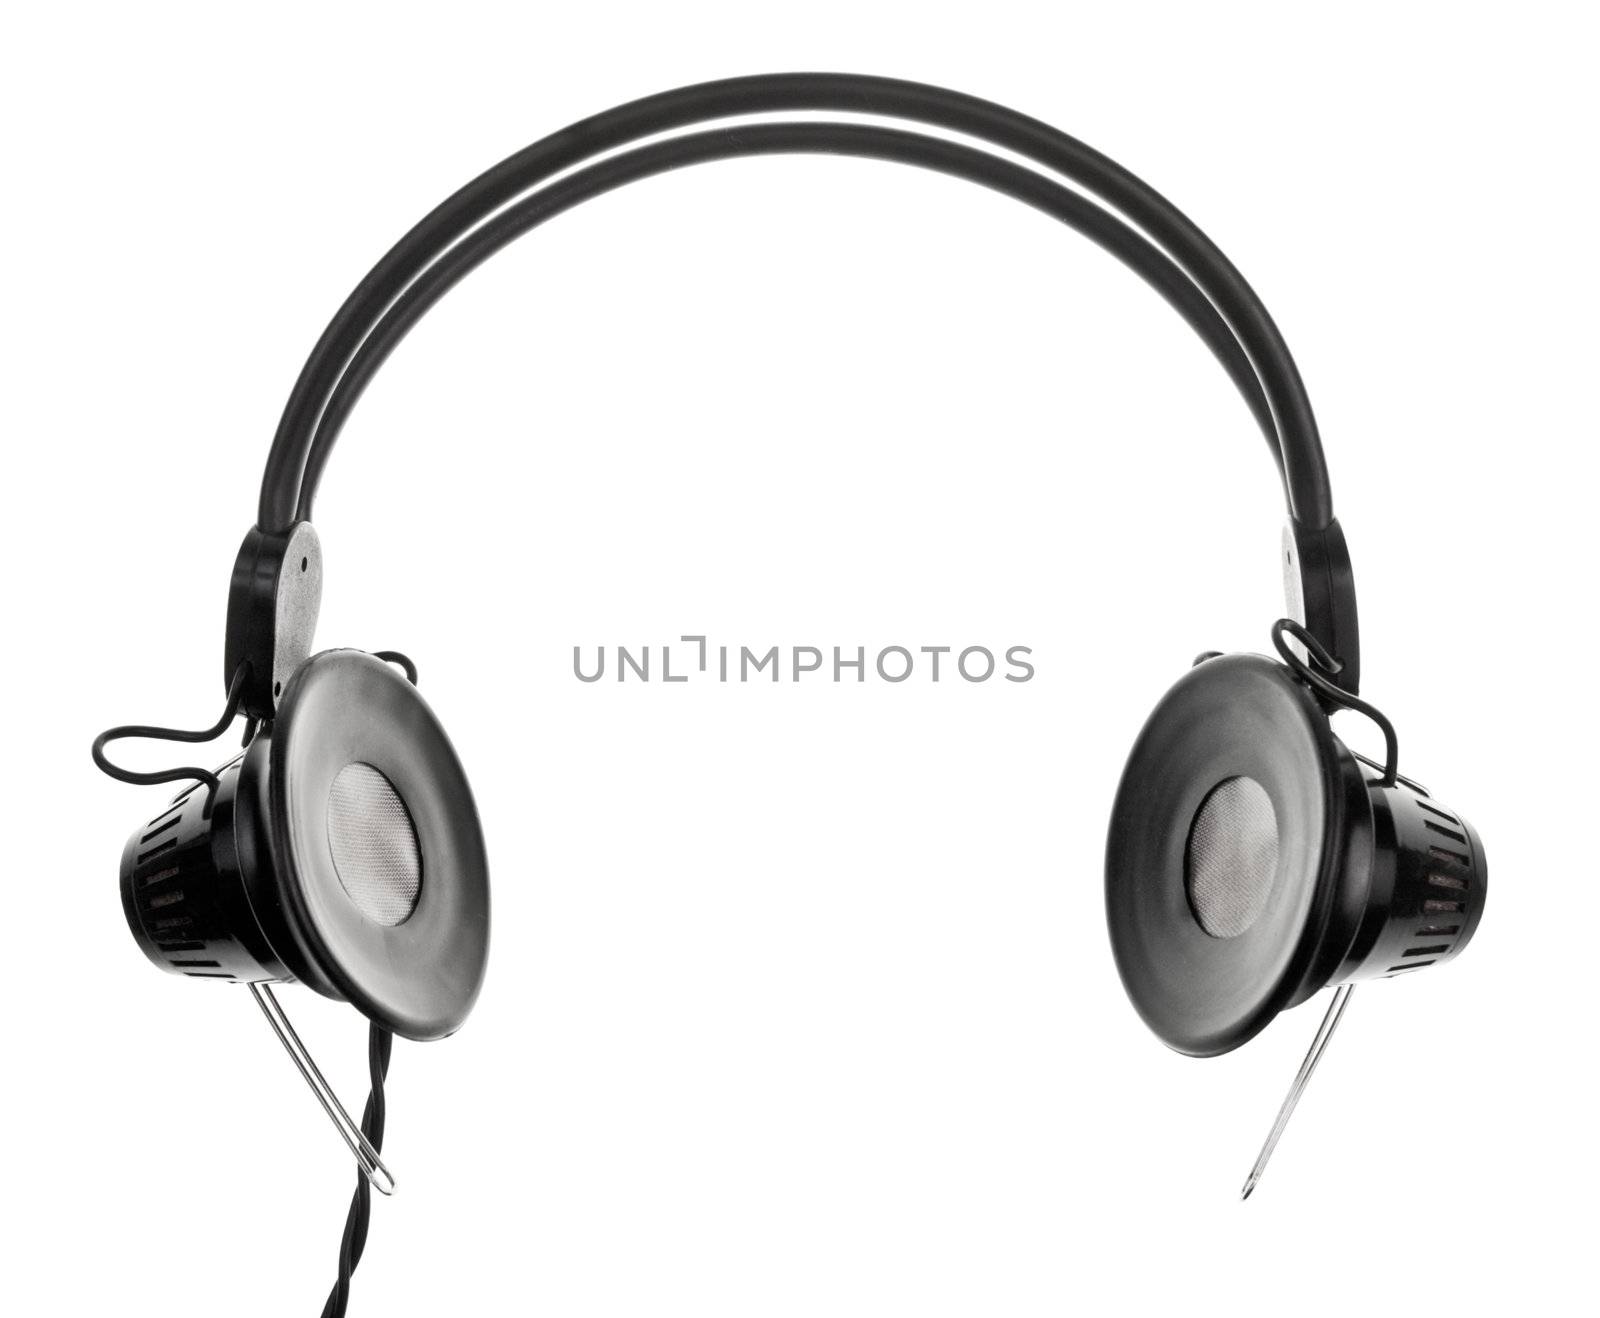 Vintage headphones on white background